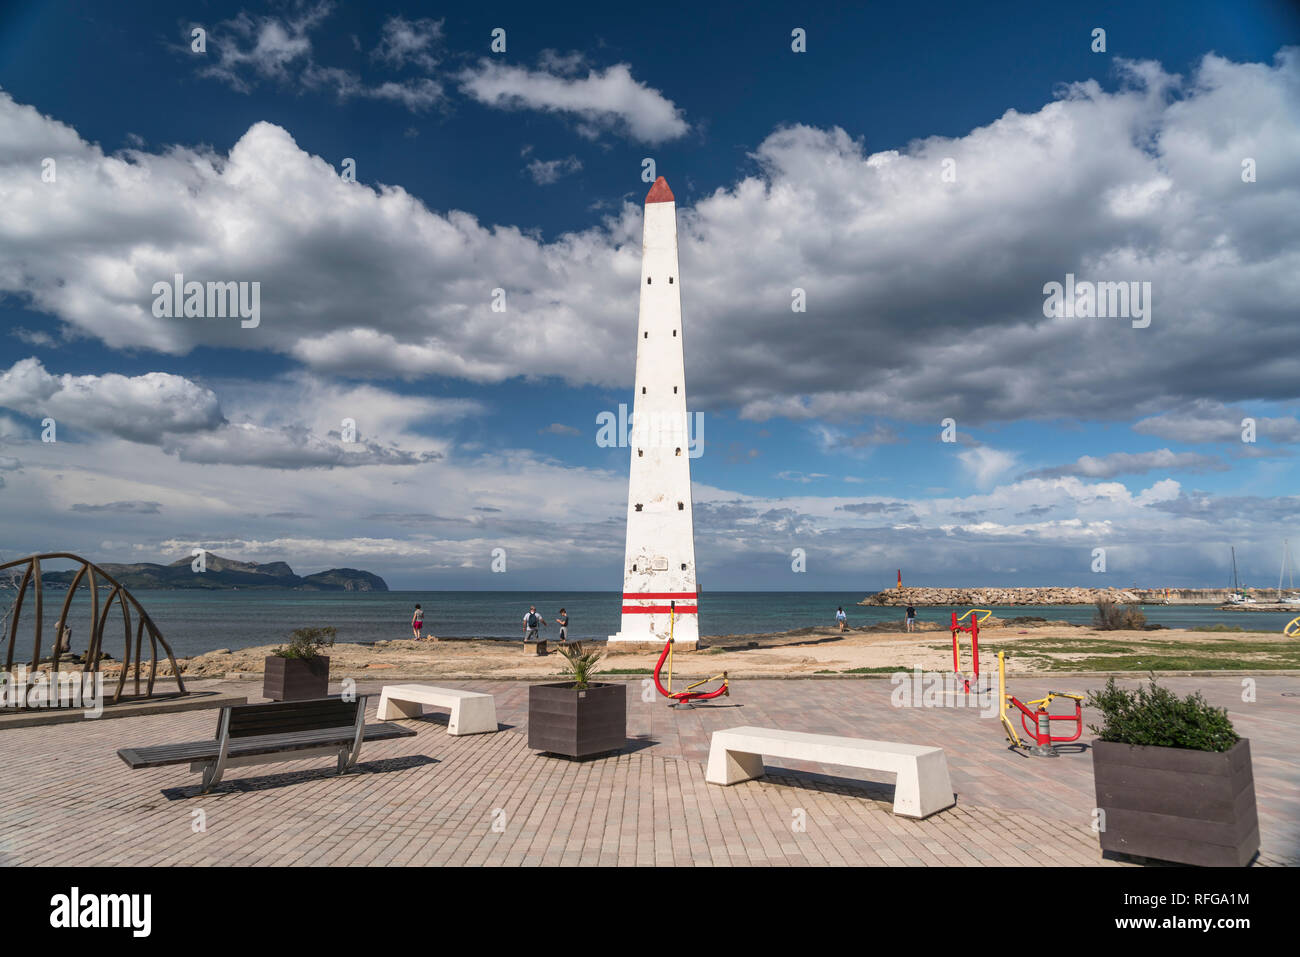 Obelisco an der Uferpromenade, Can Picafort, Mallorca, Balearen, Spanien | obelsik en el paseo de la playa de Can Picafort, Mallorca, Islas Baleares, Foto de stock